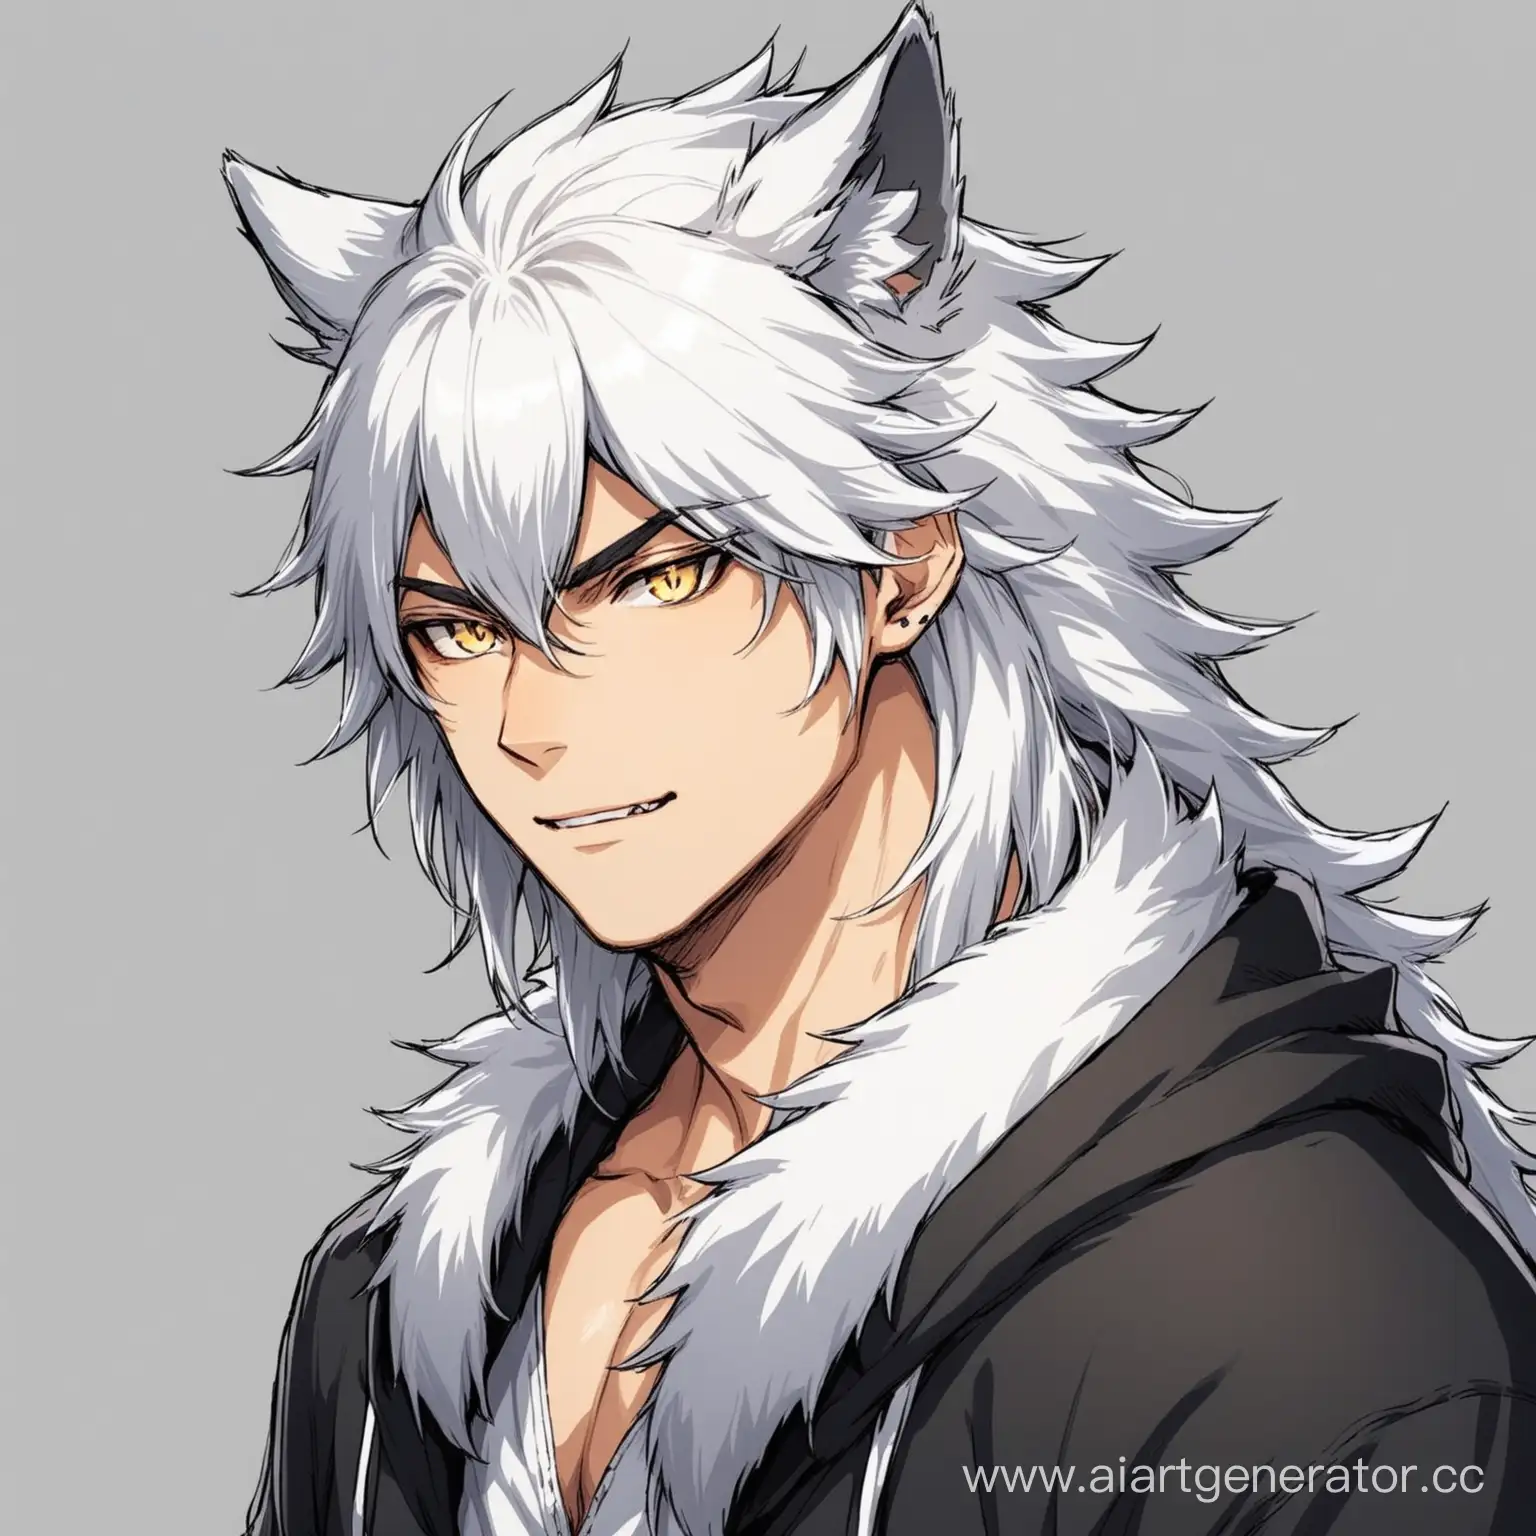 Mystical-Wolf-Man-with-Striking-White-Hair